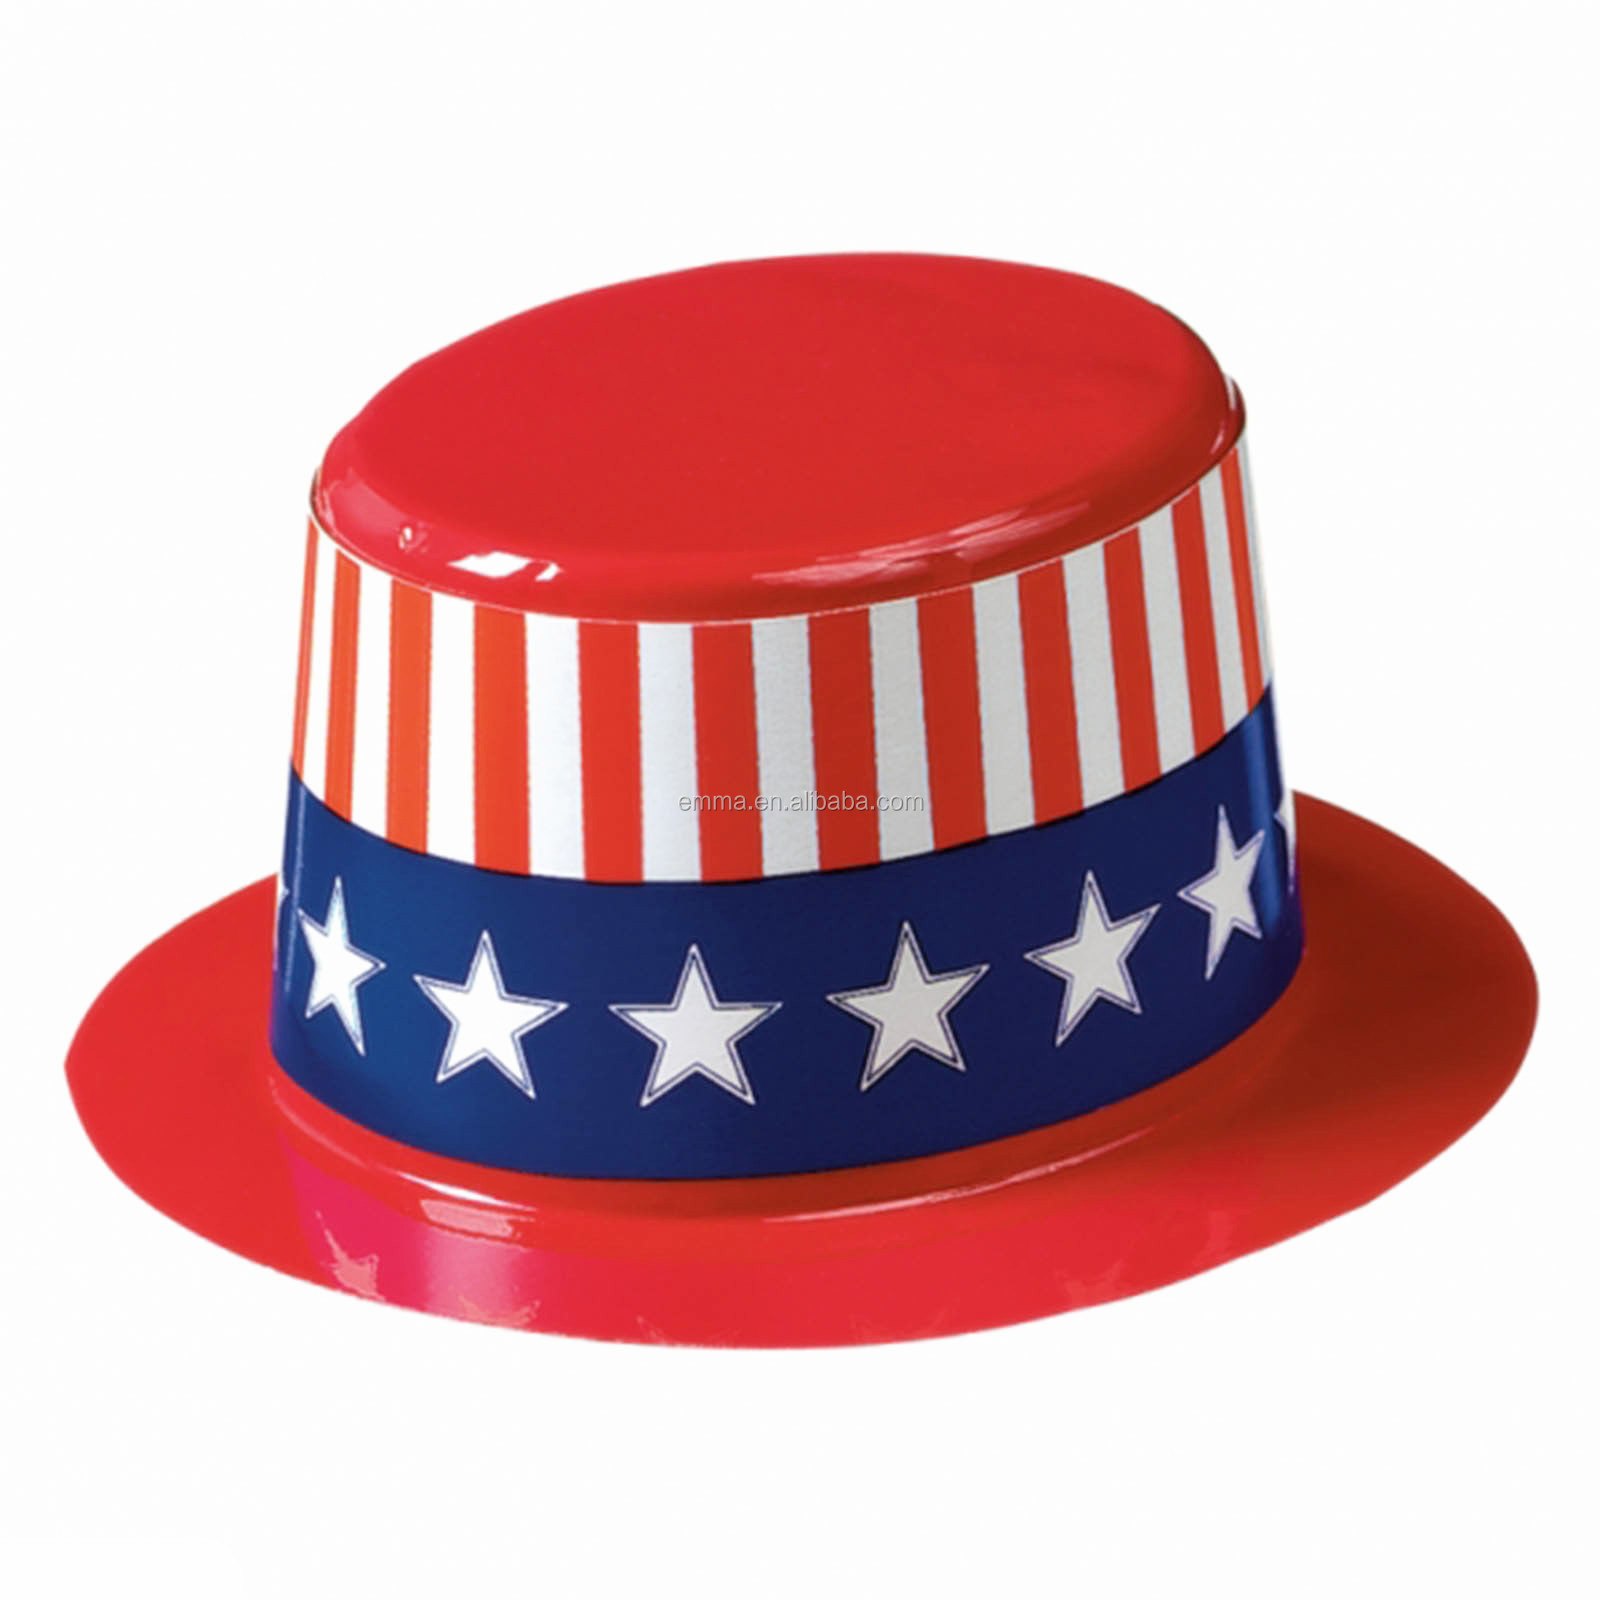 Партия шляп. Шляпы Америка 1600. American Top hat.